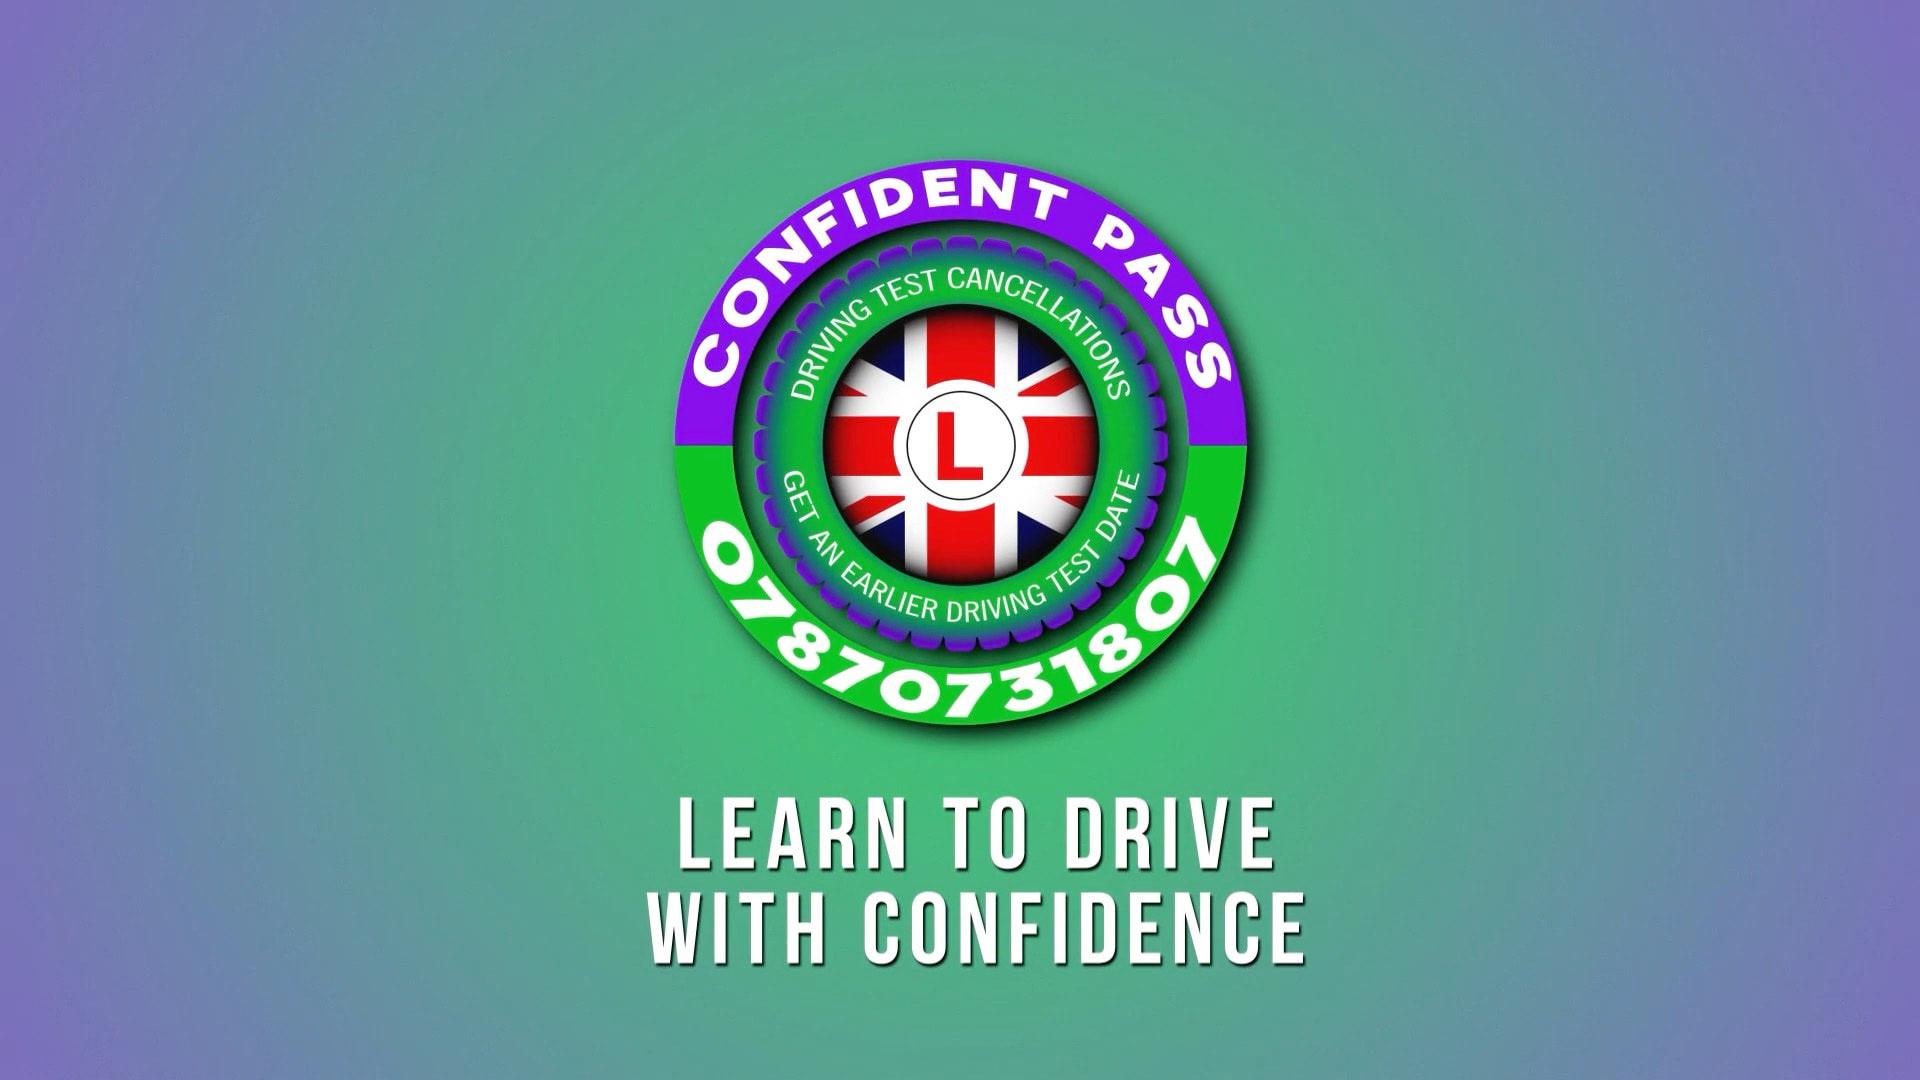 Confident Pass Driving School Watford 07870 731807